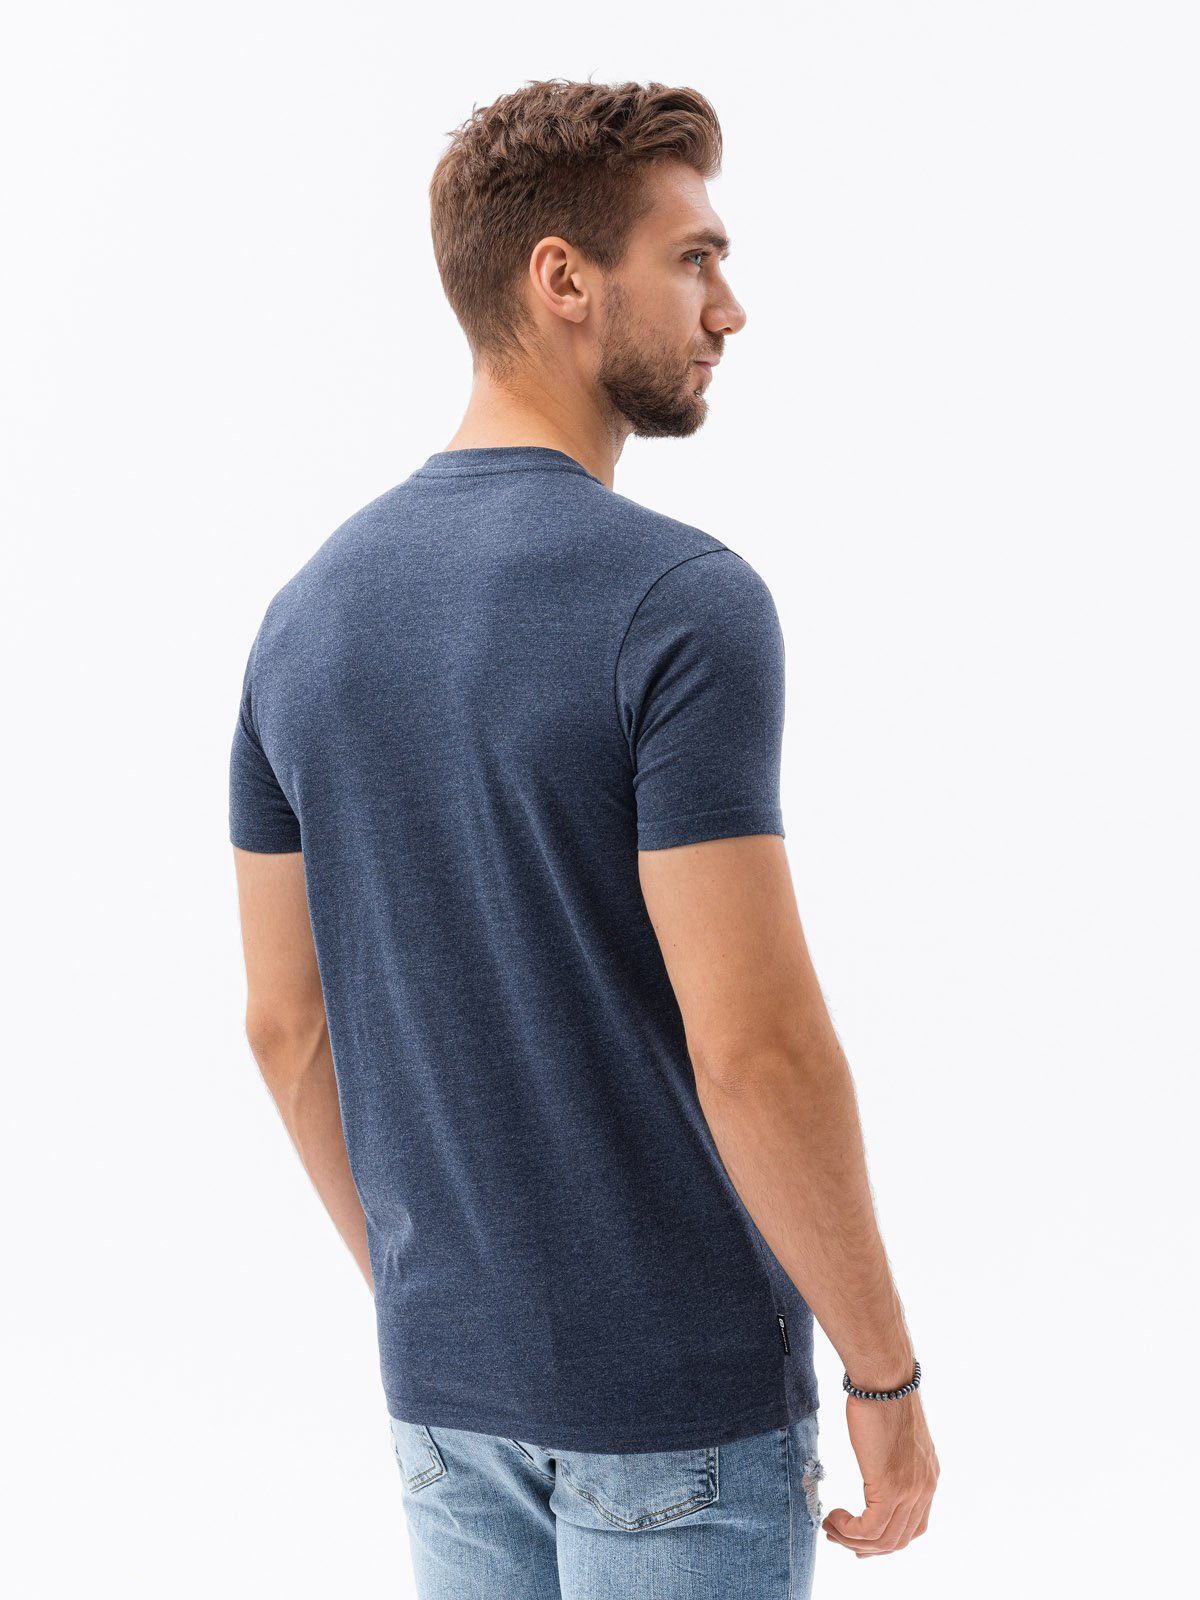 - Unifarbenes T-Shirt Herren-T-Shirt L OMBRE S1390 marineblau